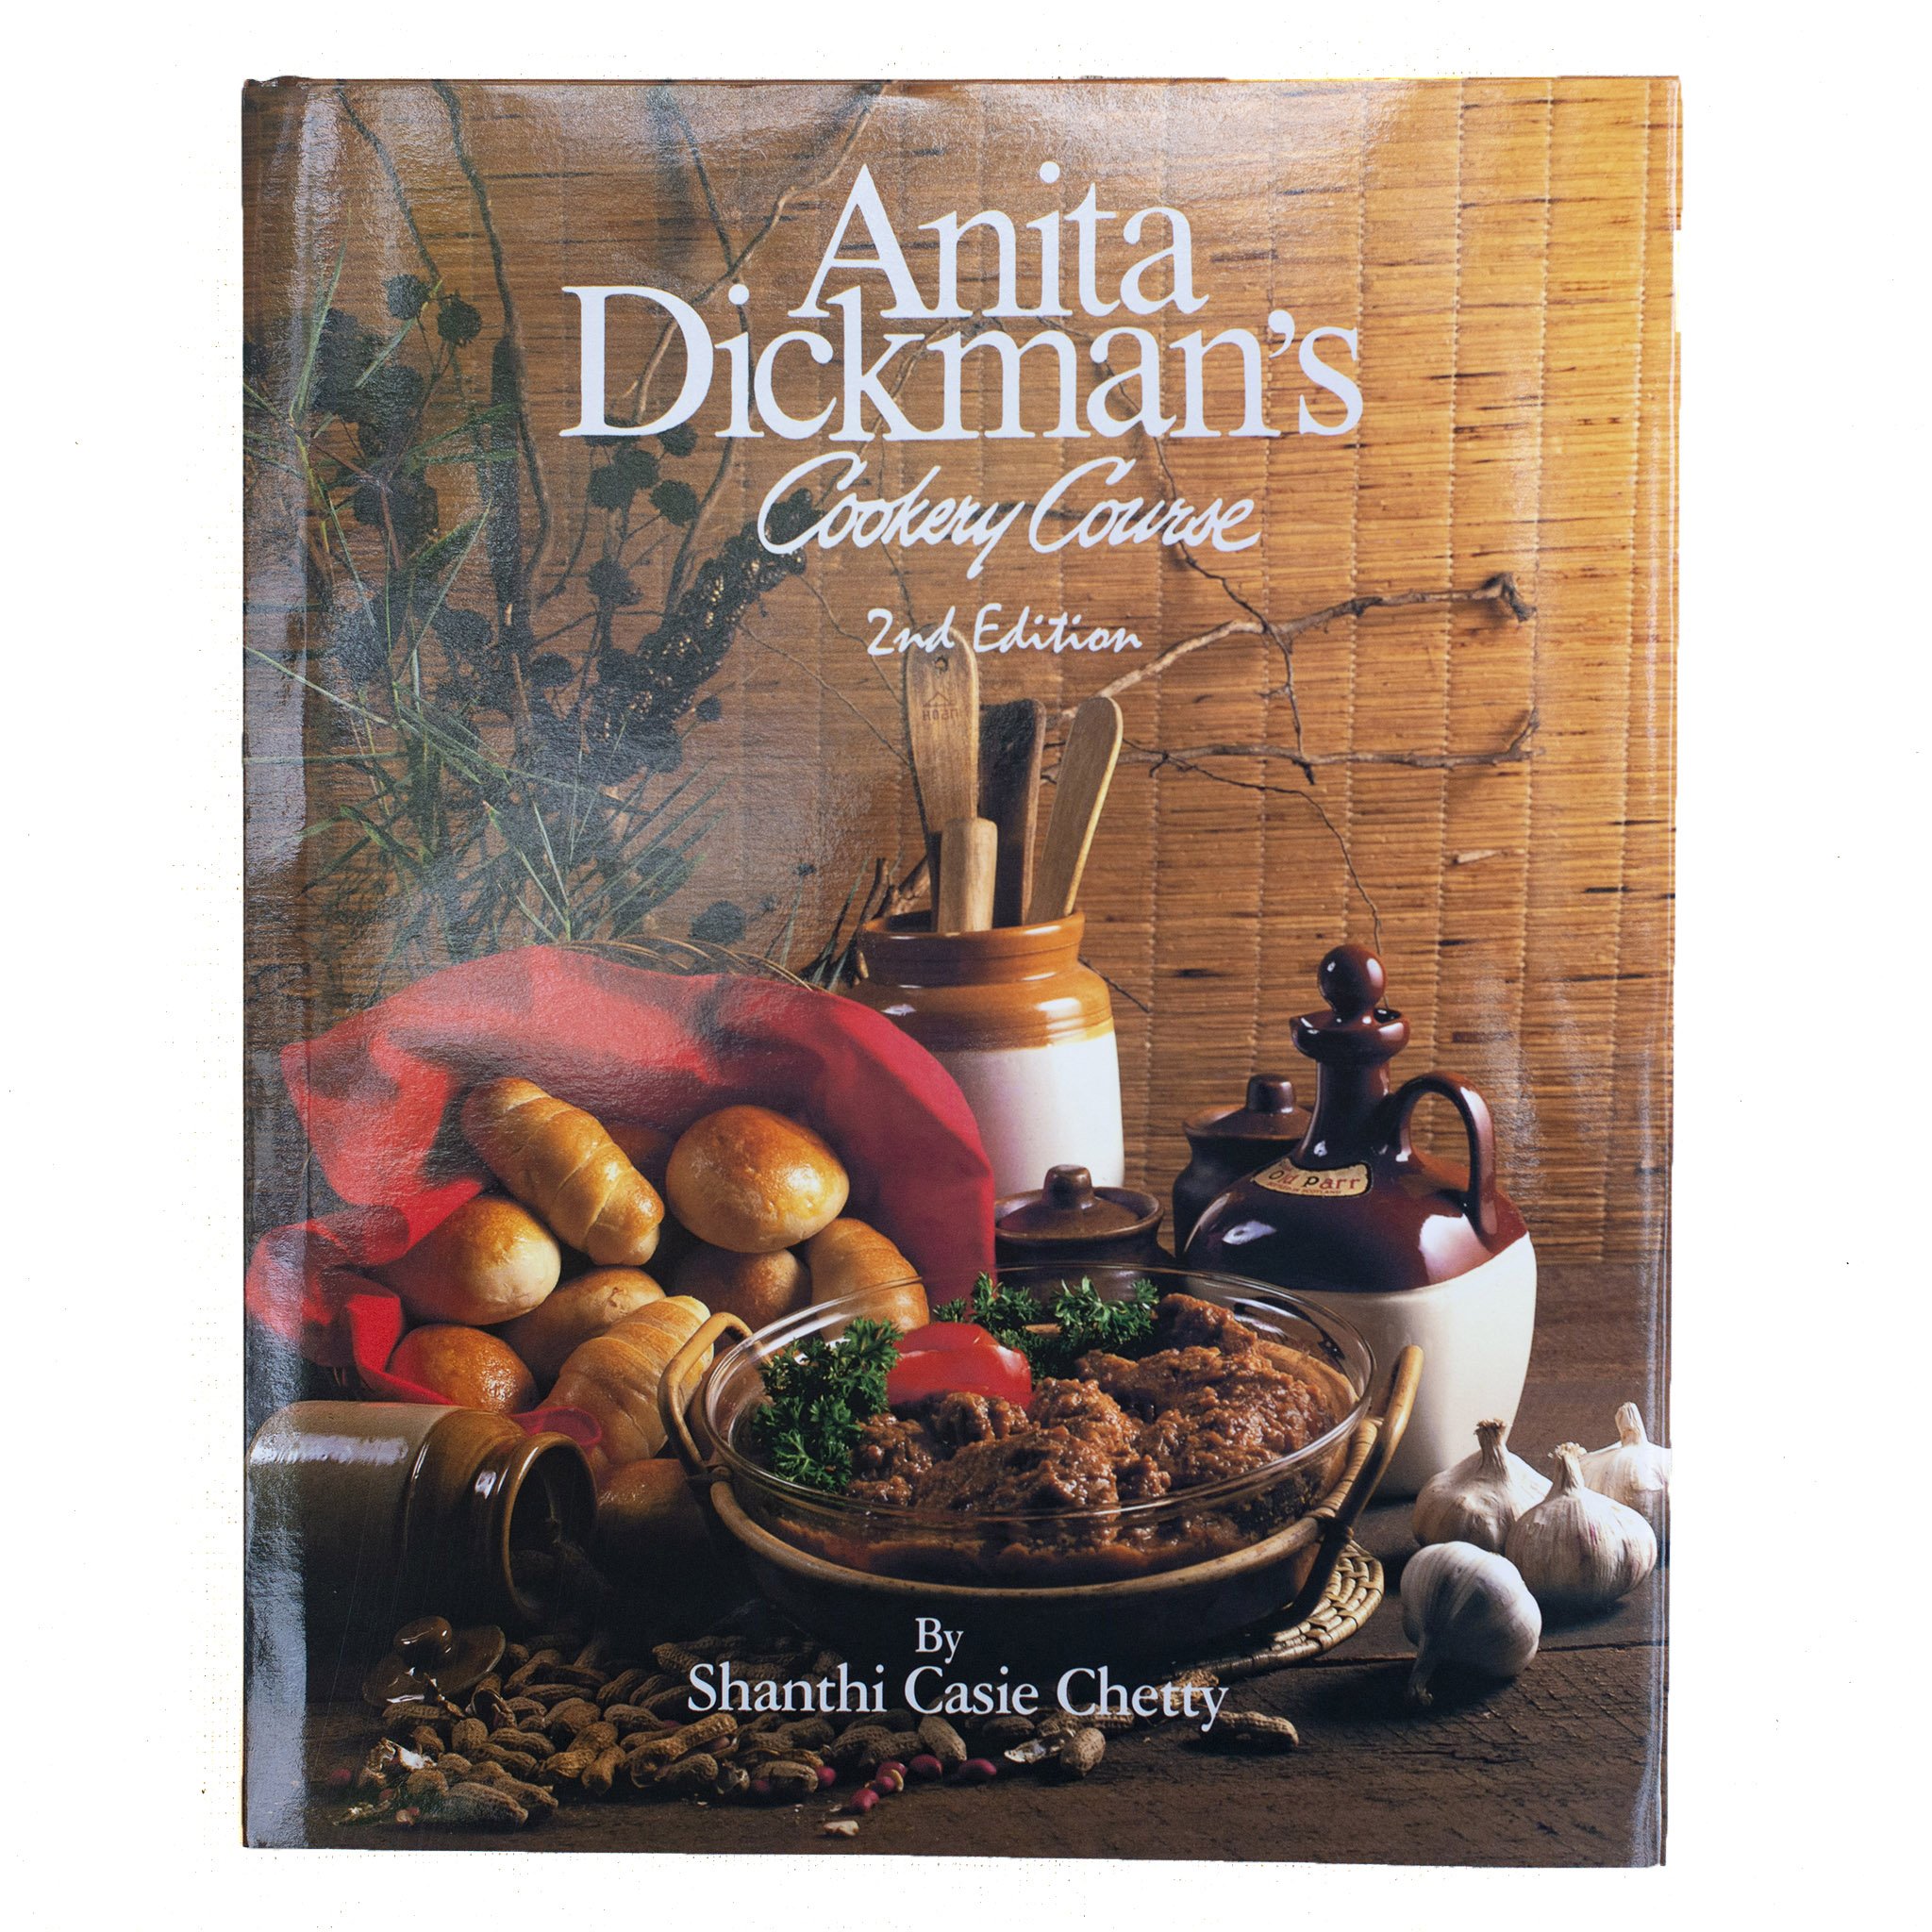 Anita Dickmans Cookery Course